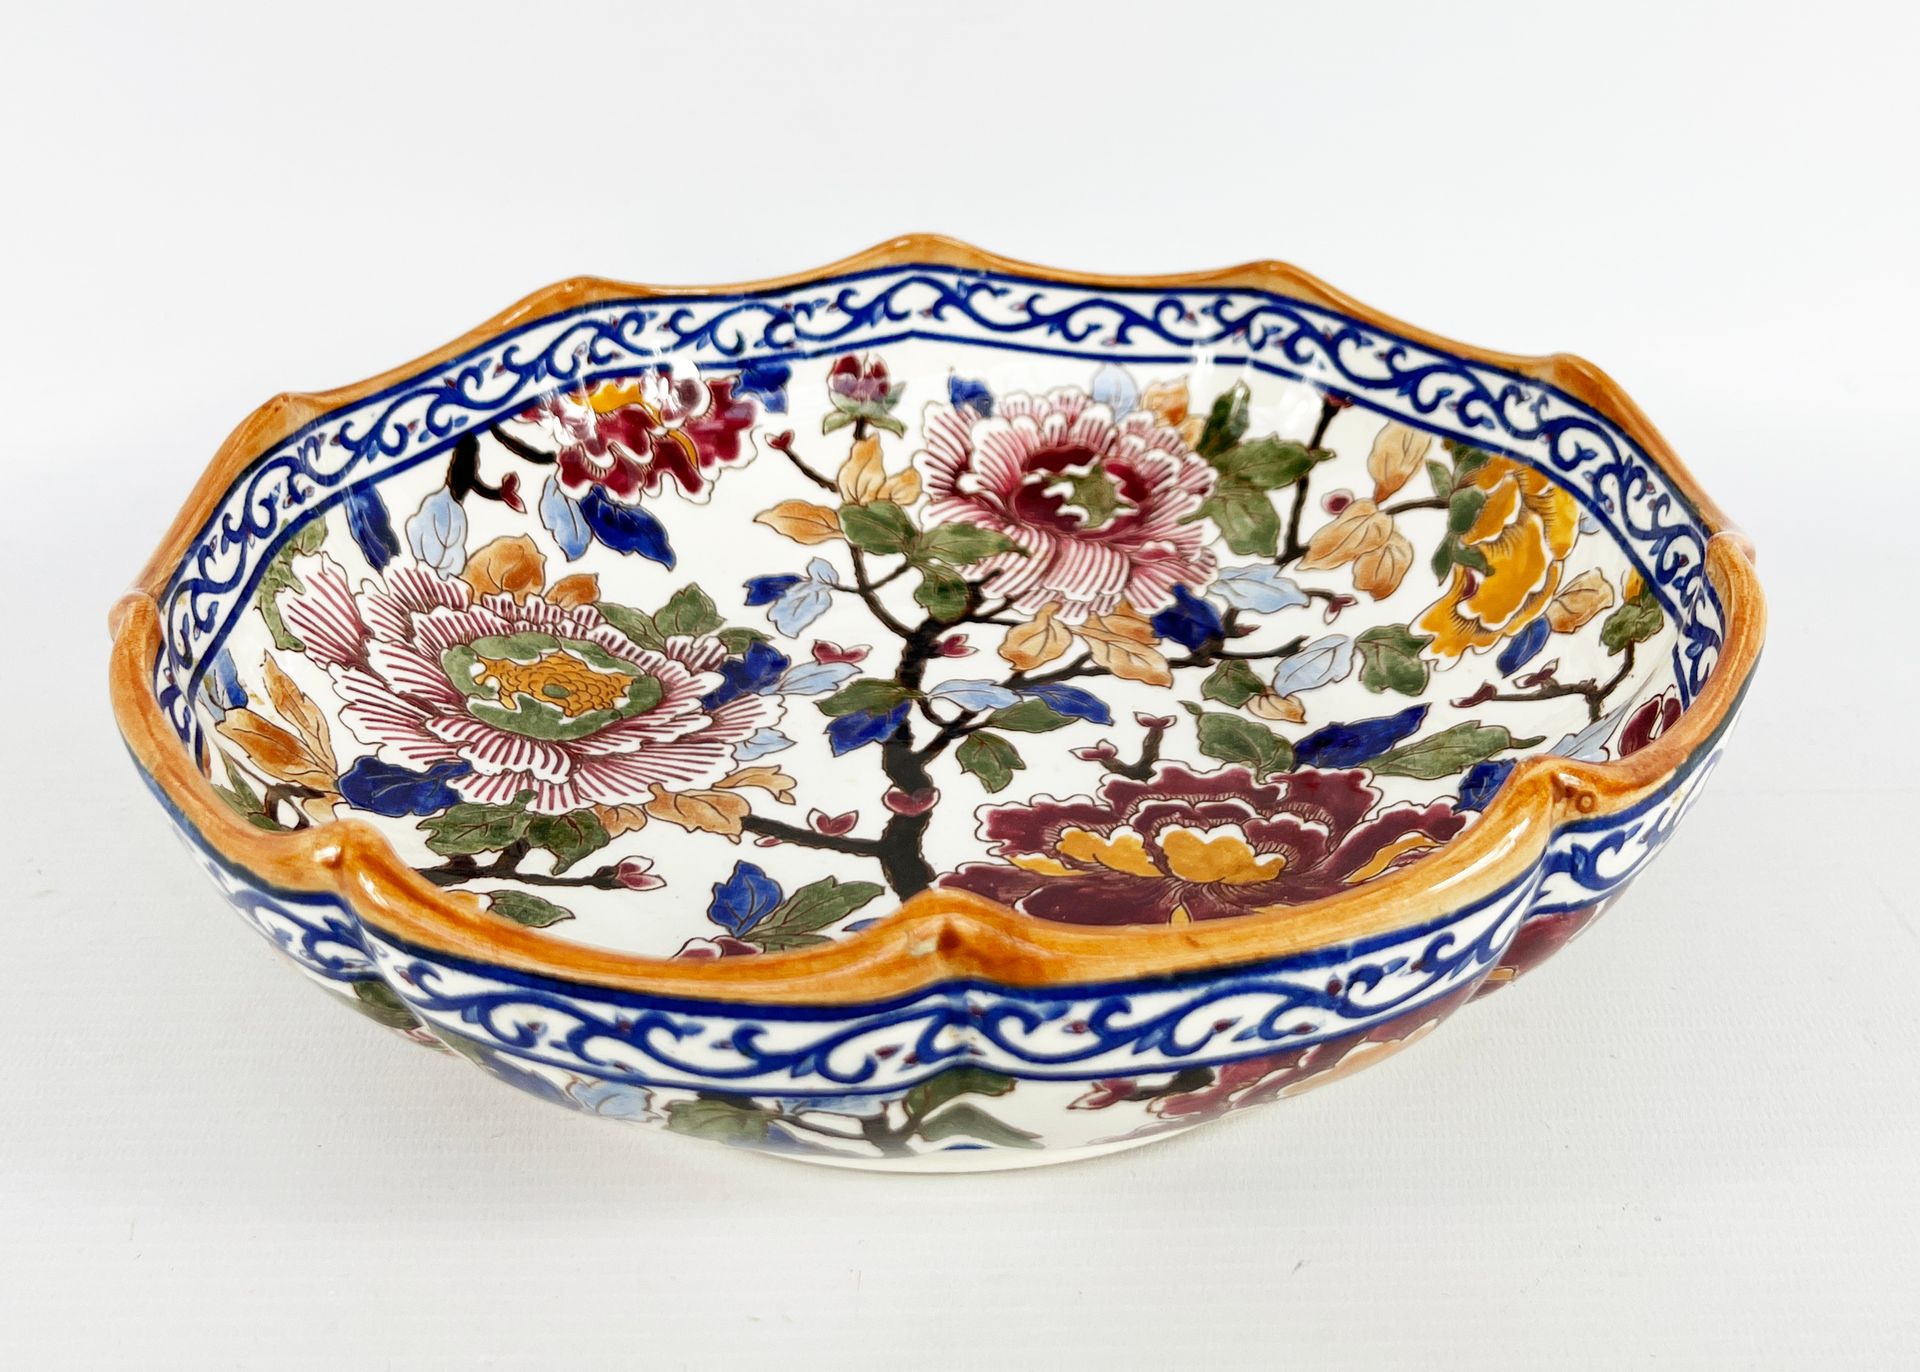 Null GIEN

釉面陶器沙拉碗，有一个移动的边缘，装饰有牡丹花。

壁挂系统。

D.27厘米